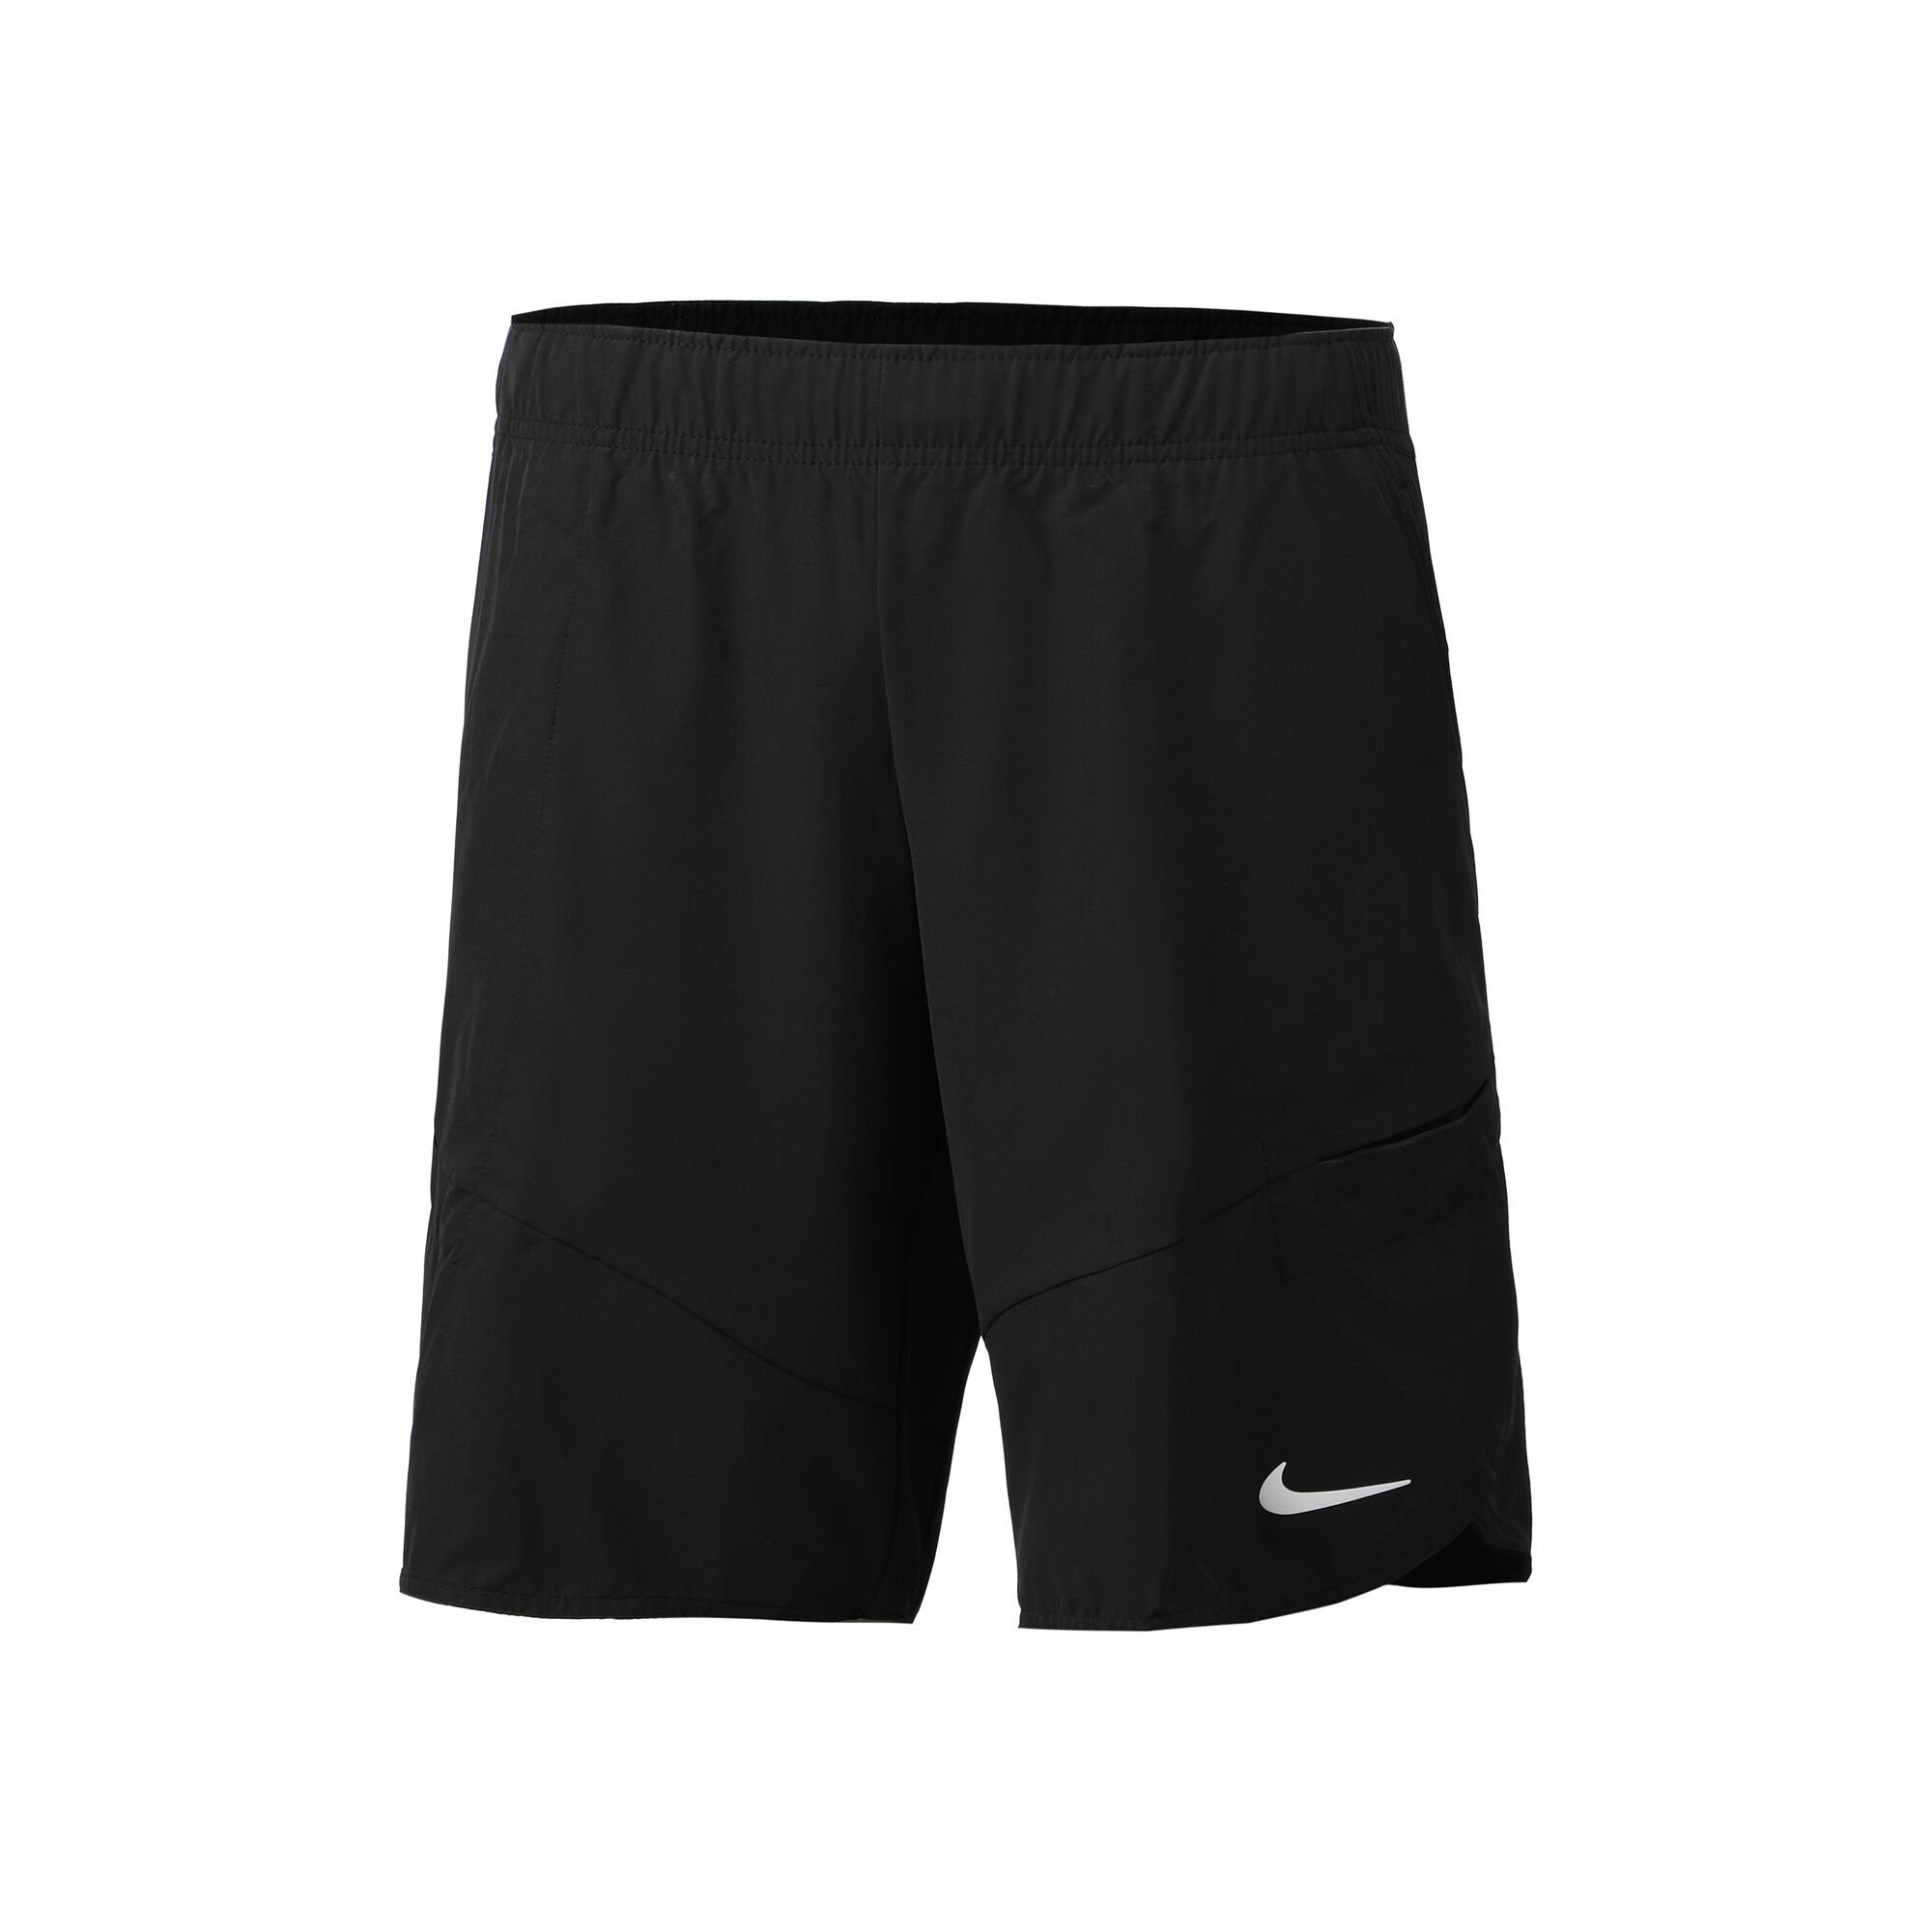 Buy Nike Dri-Fit Advantage 9in Shorts Men Black online